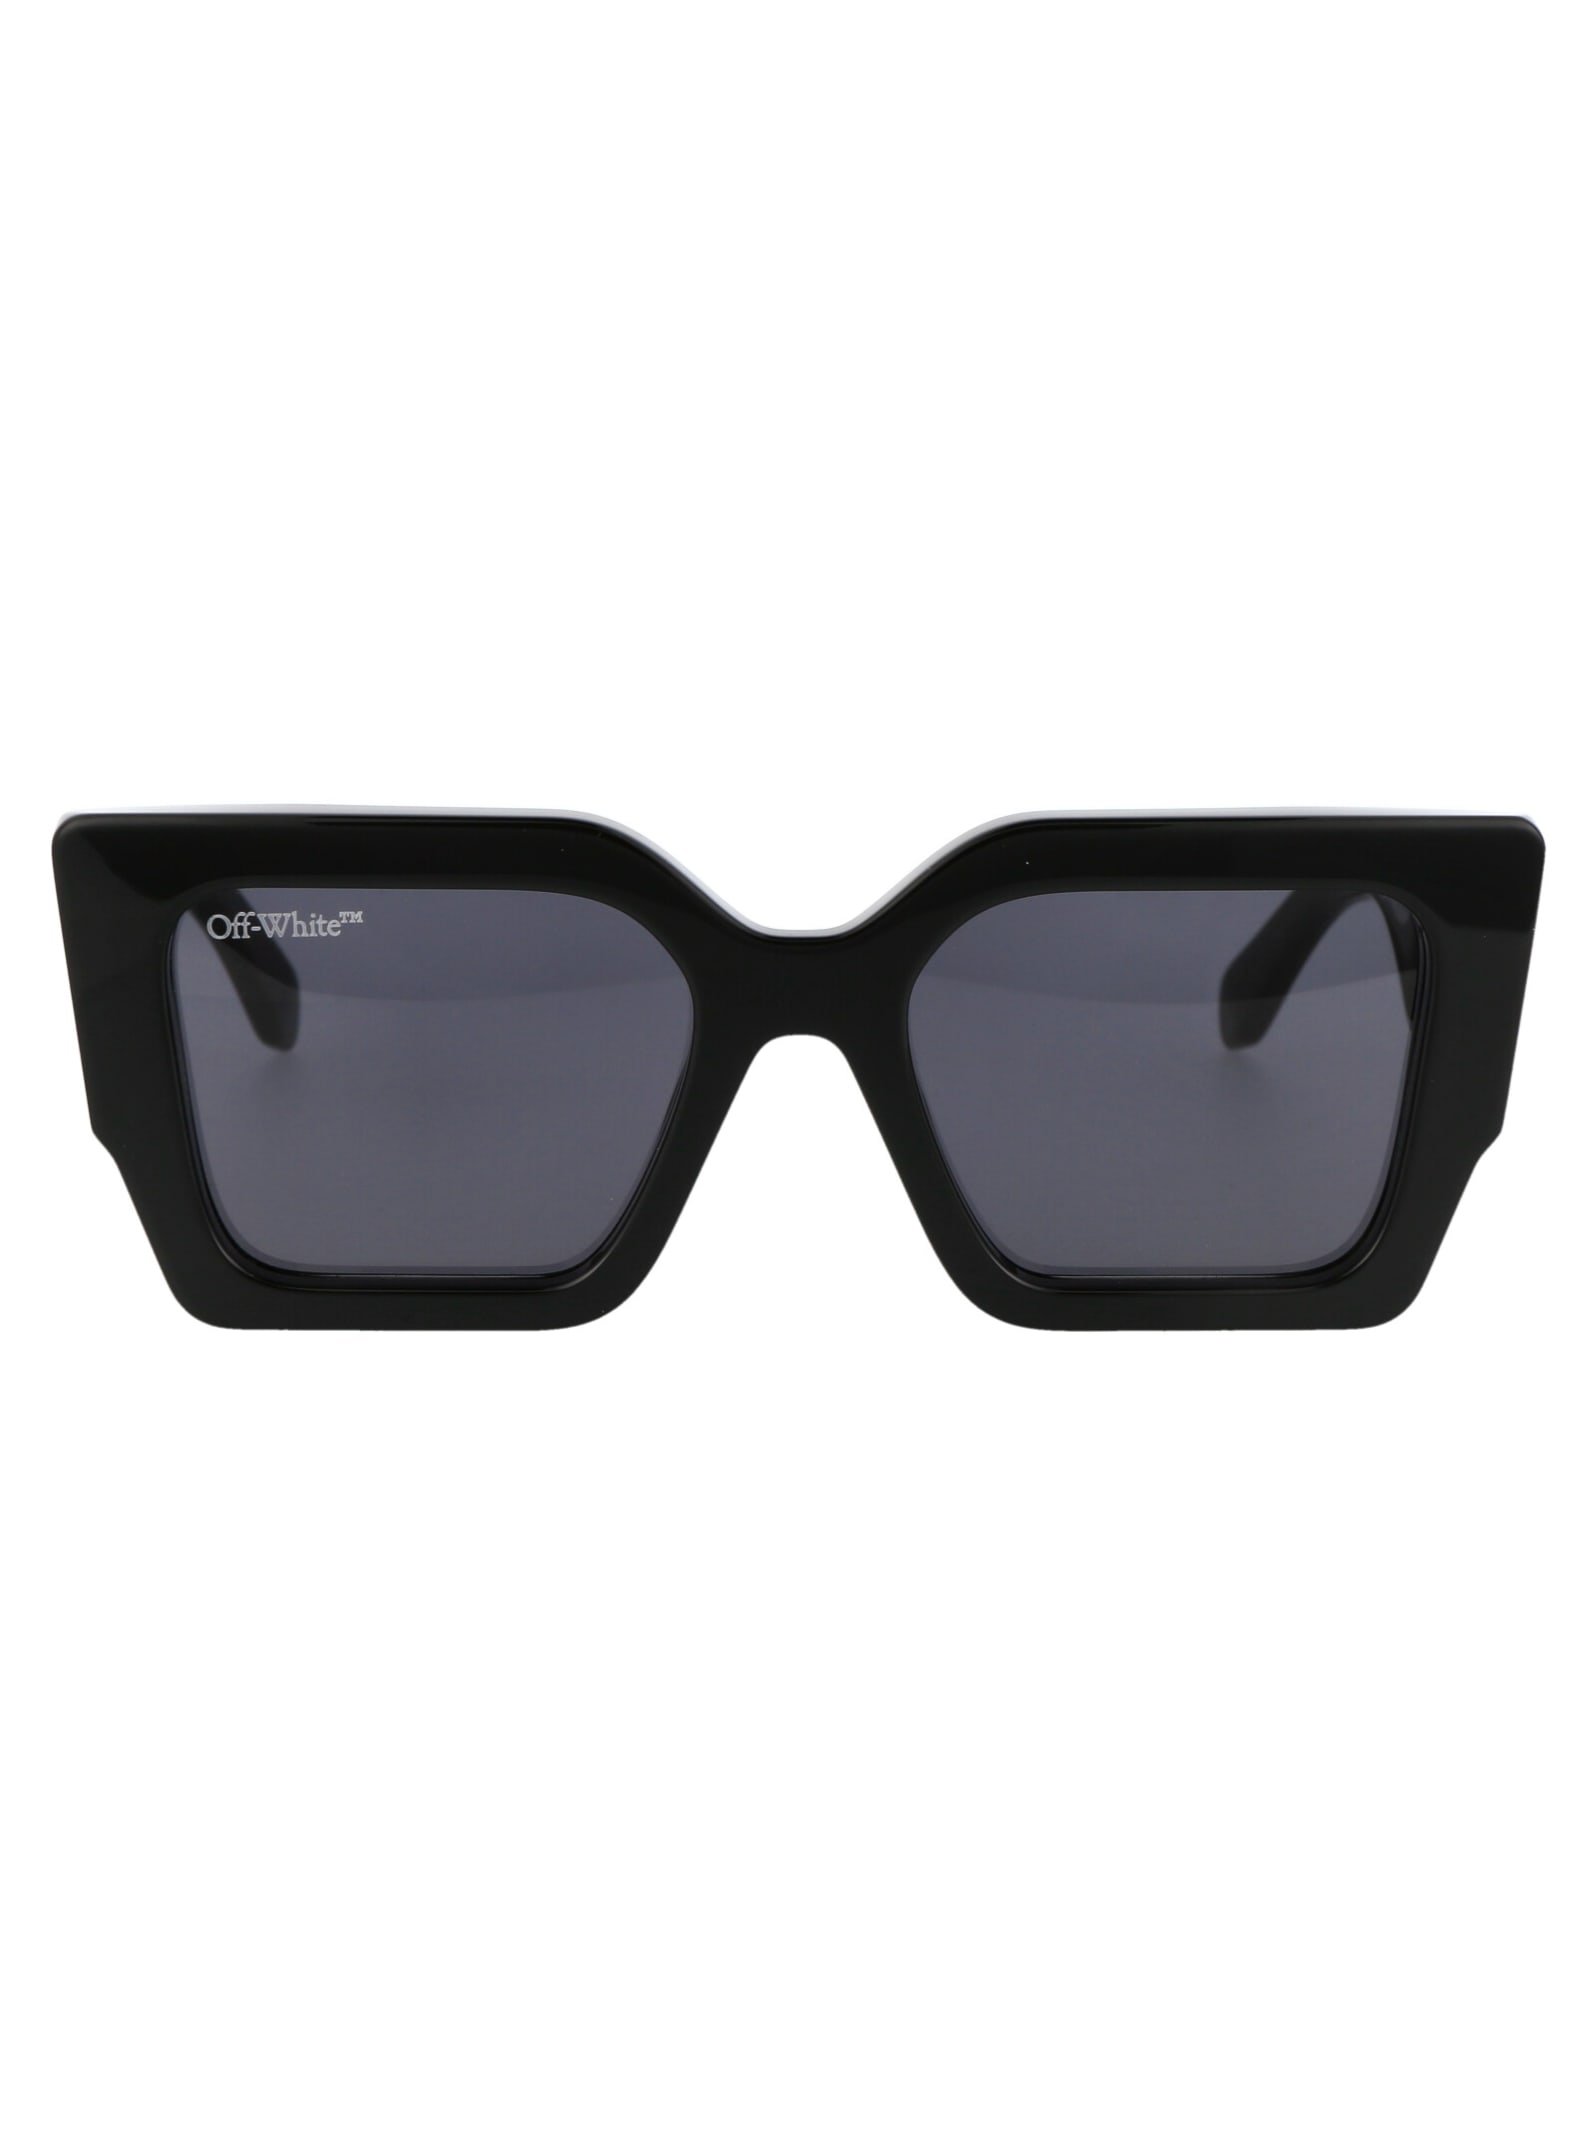 Sunglasses Off-White Black in Plastic - 33594963